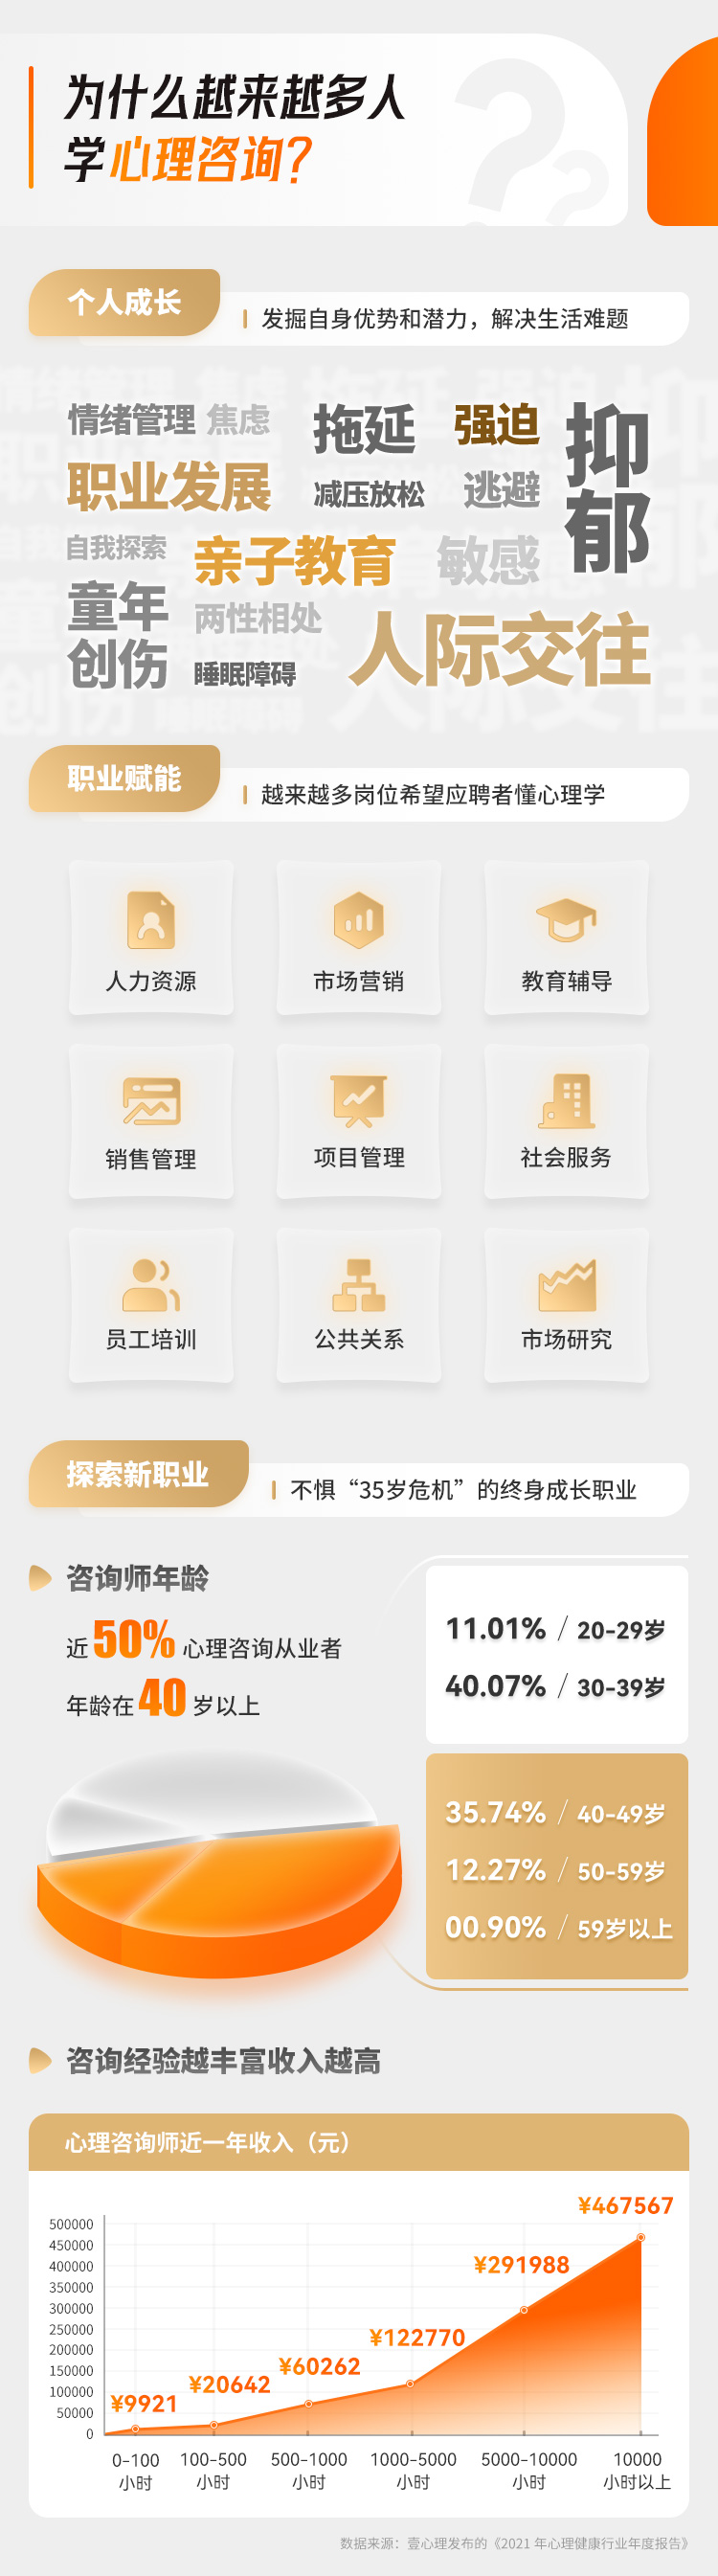 https://simg01.gaodunwangxiao.com/uploadfiles/product-center/202304/23/ddf11_20230423101647.jpg